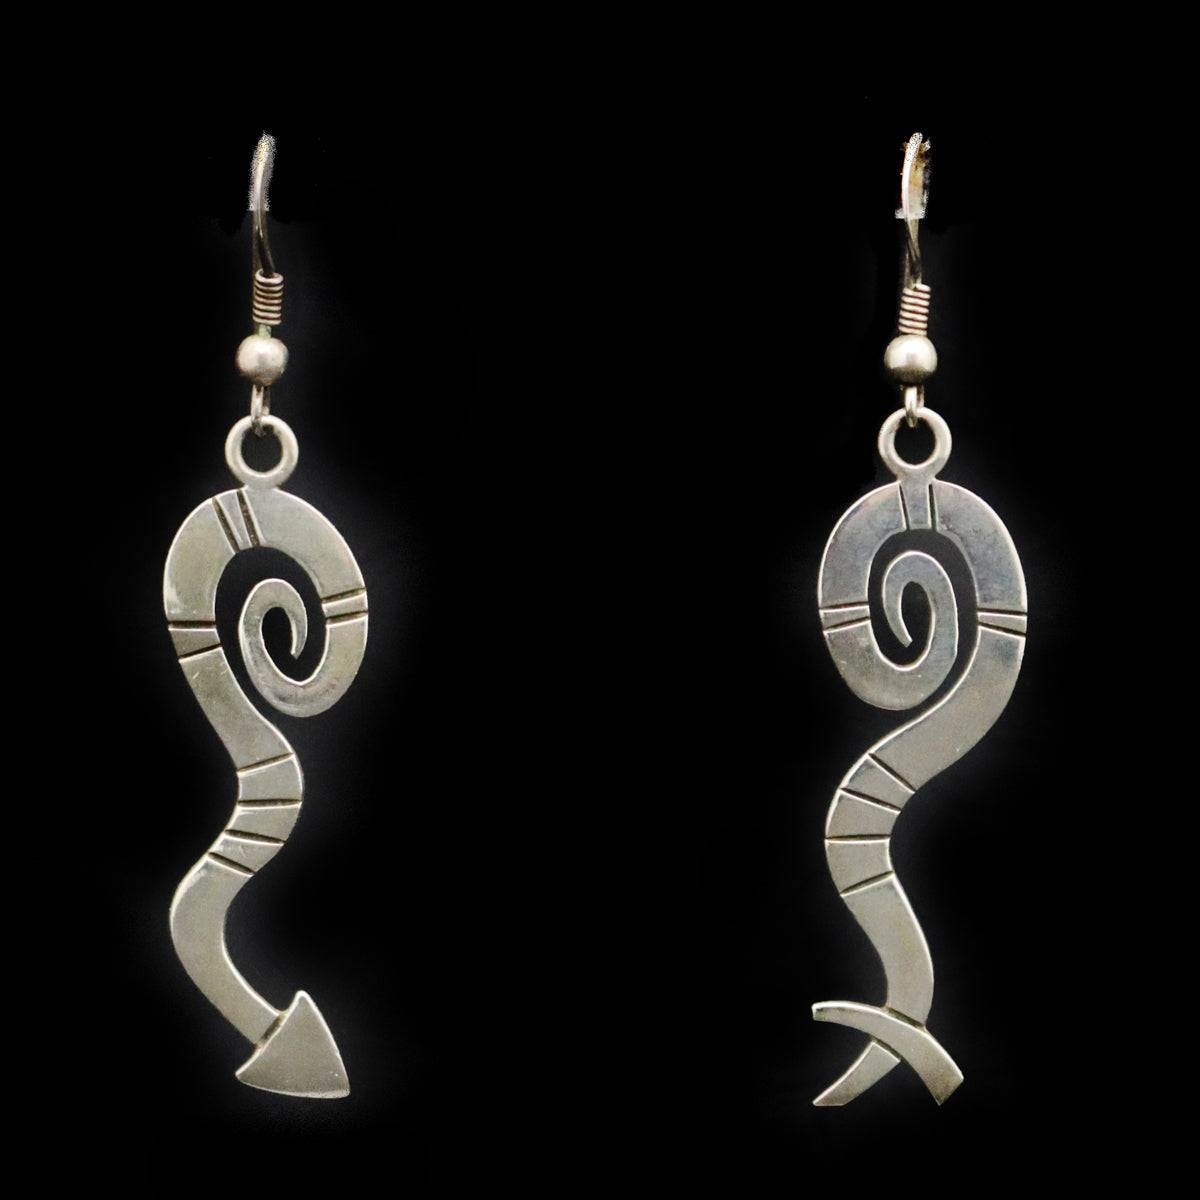 Victor Lee Masayesva (b. 1962) - Hopi Silver Overlay Hook Earrings c. 2000s, 2.25" x 0.5" (J13312)
